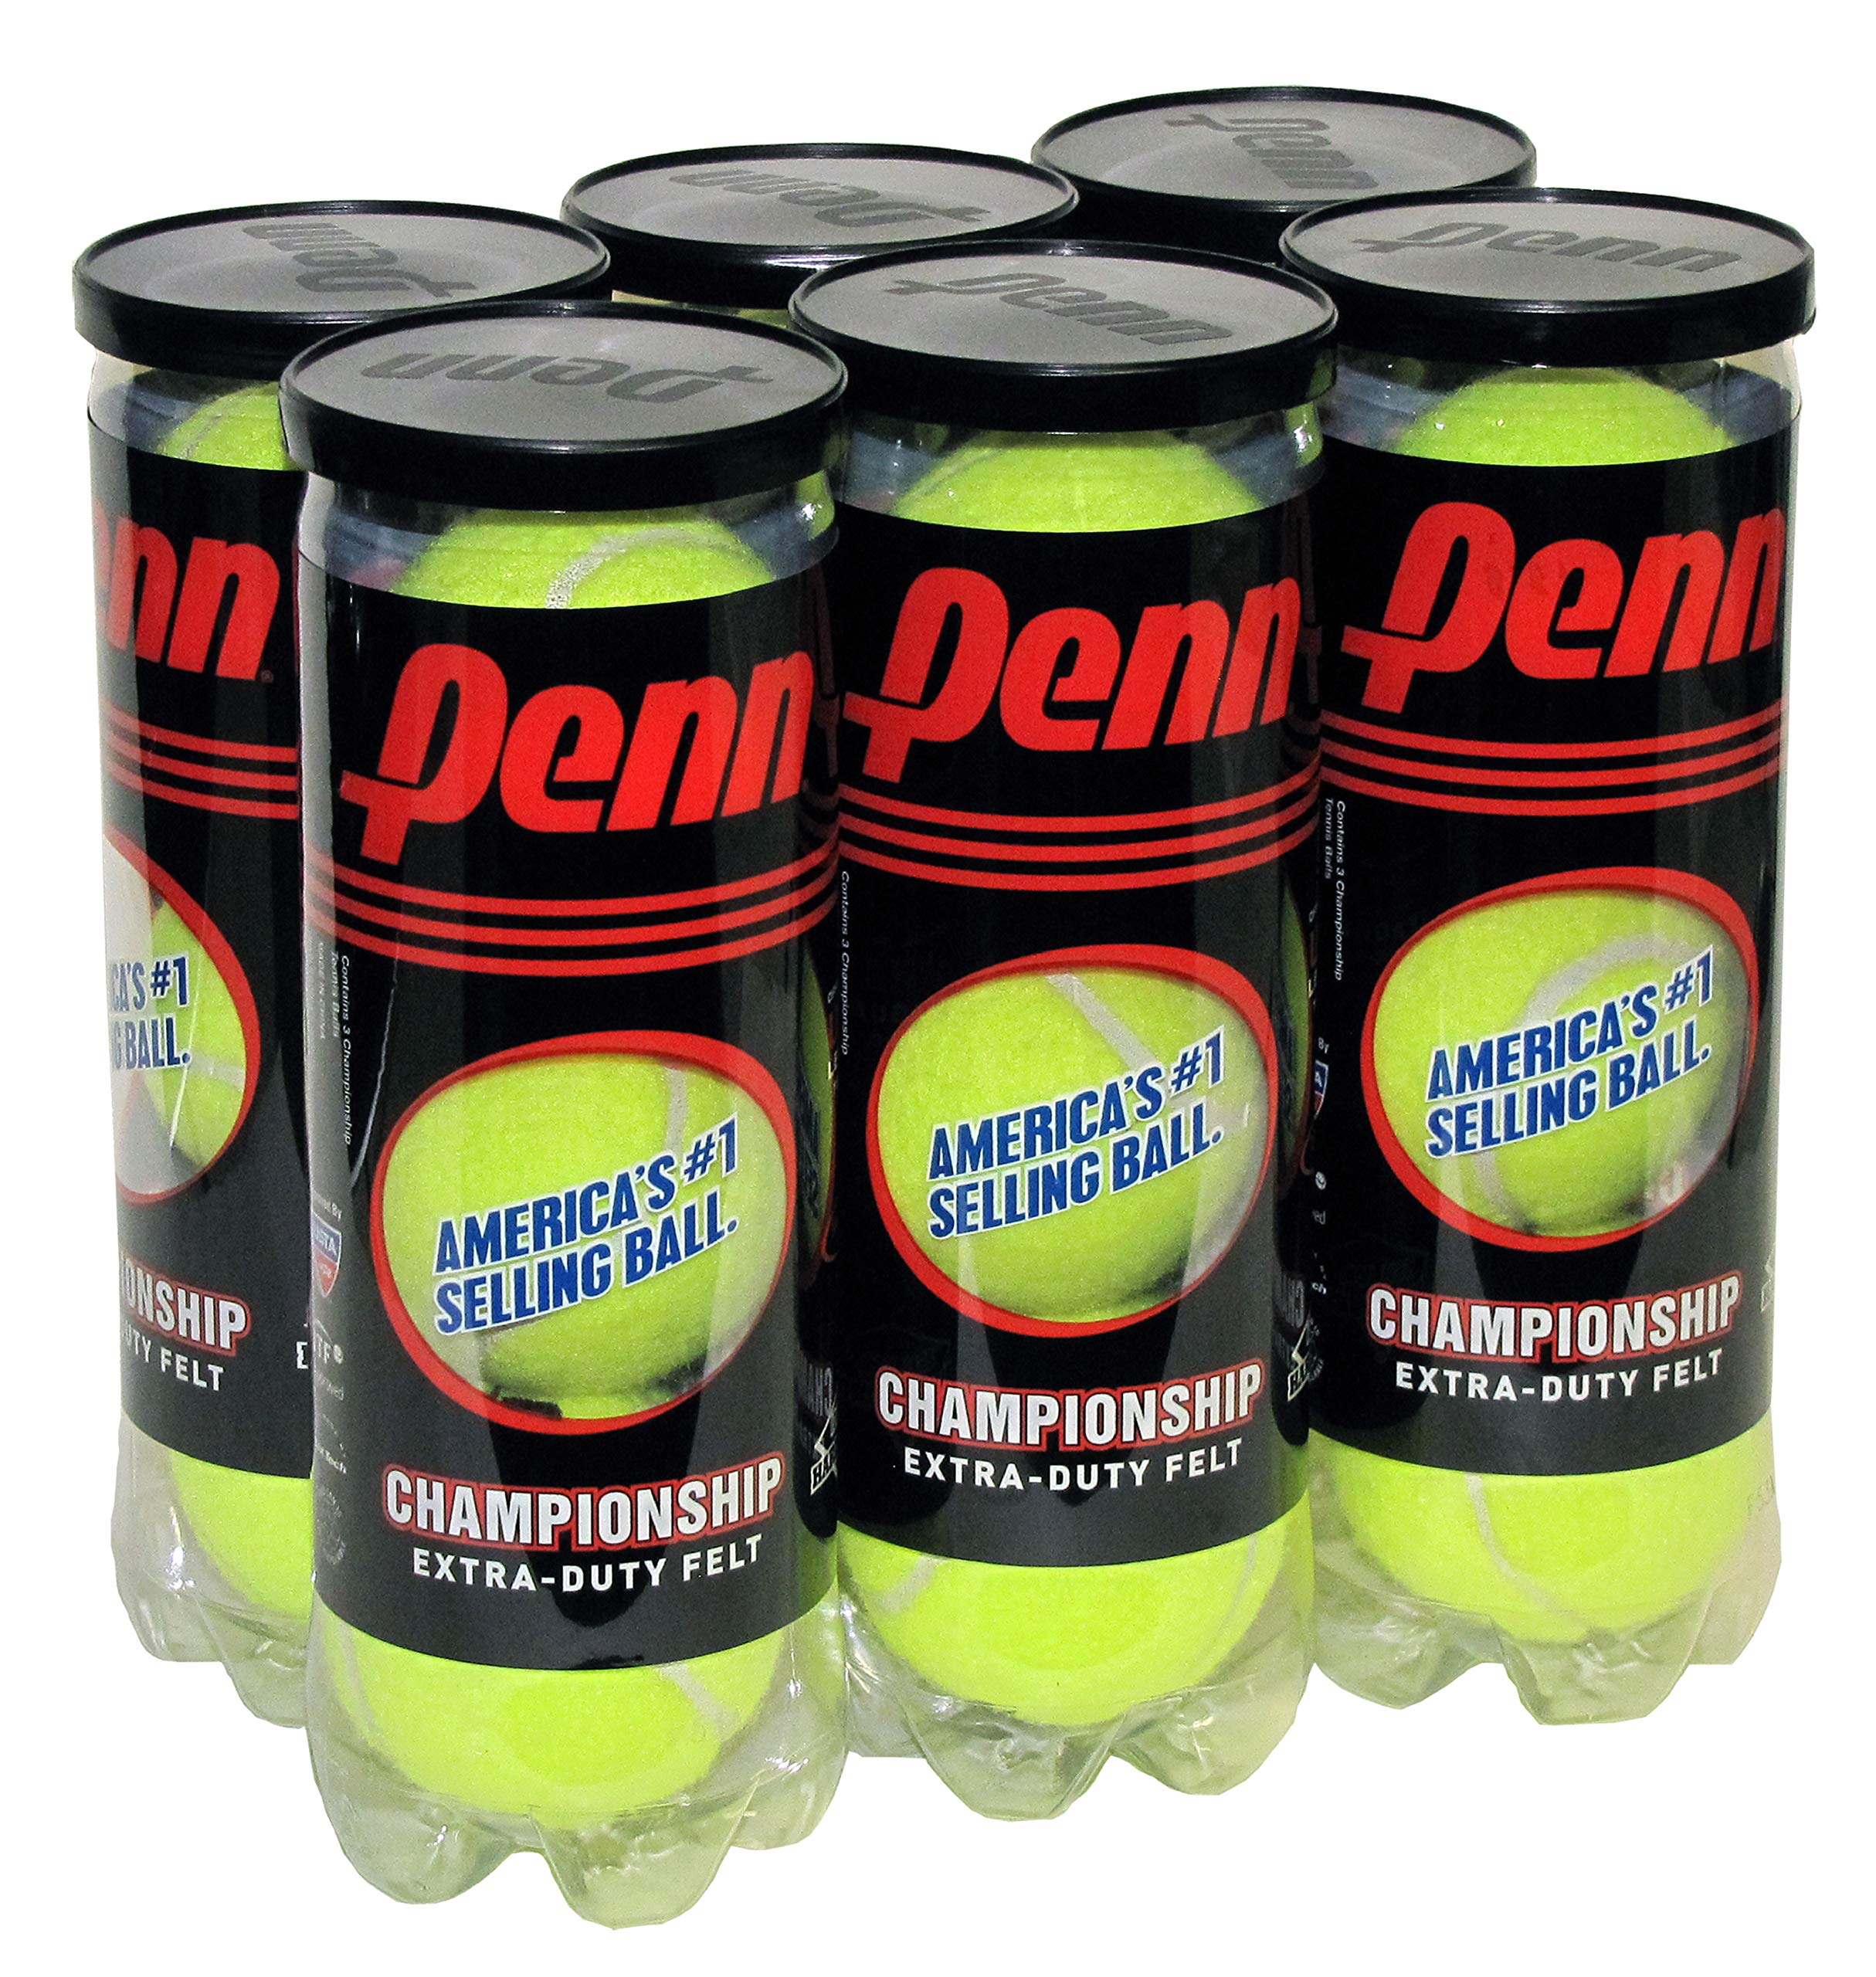 Penn Championship Tennis Balls - Extra Duty Felt Pressurized Tennis Balls - 6 Cans, 18 Balls